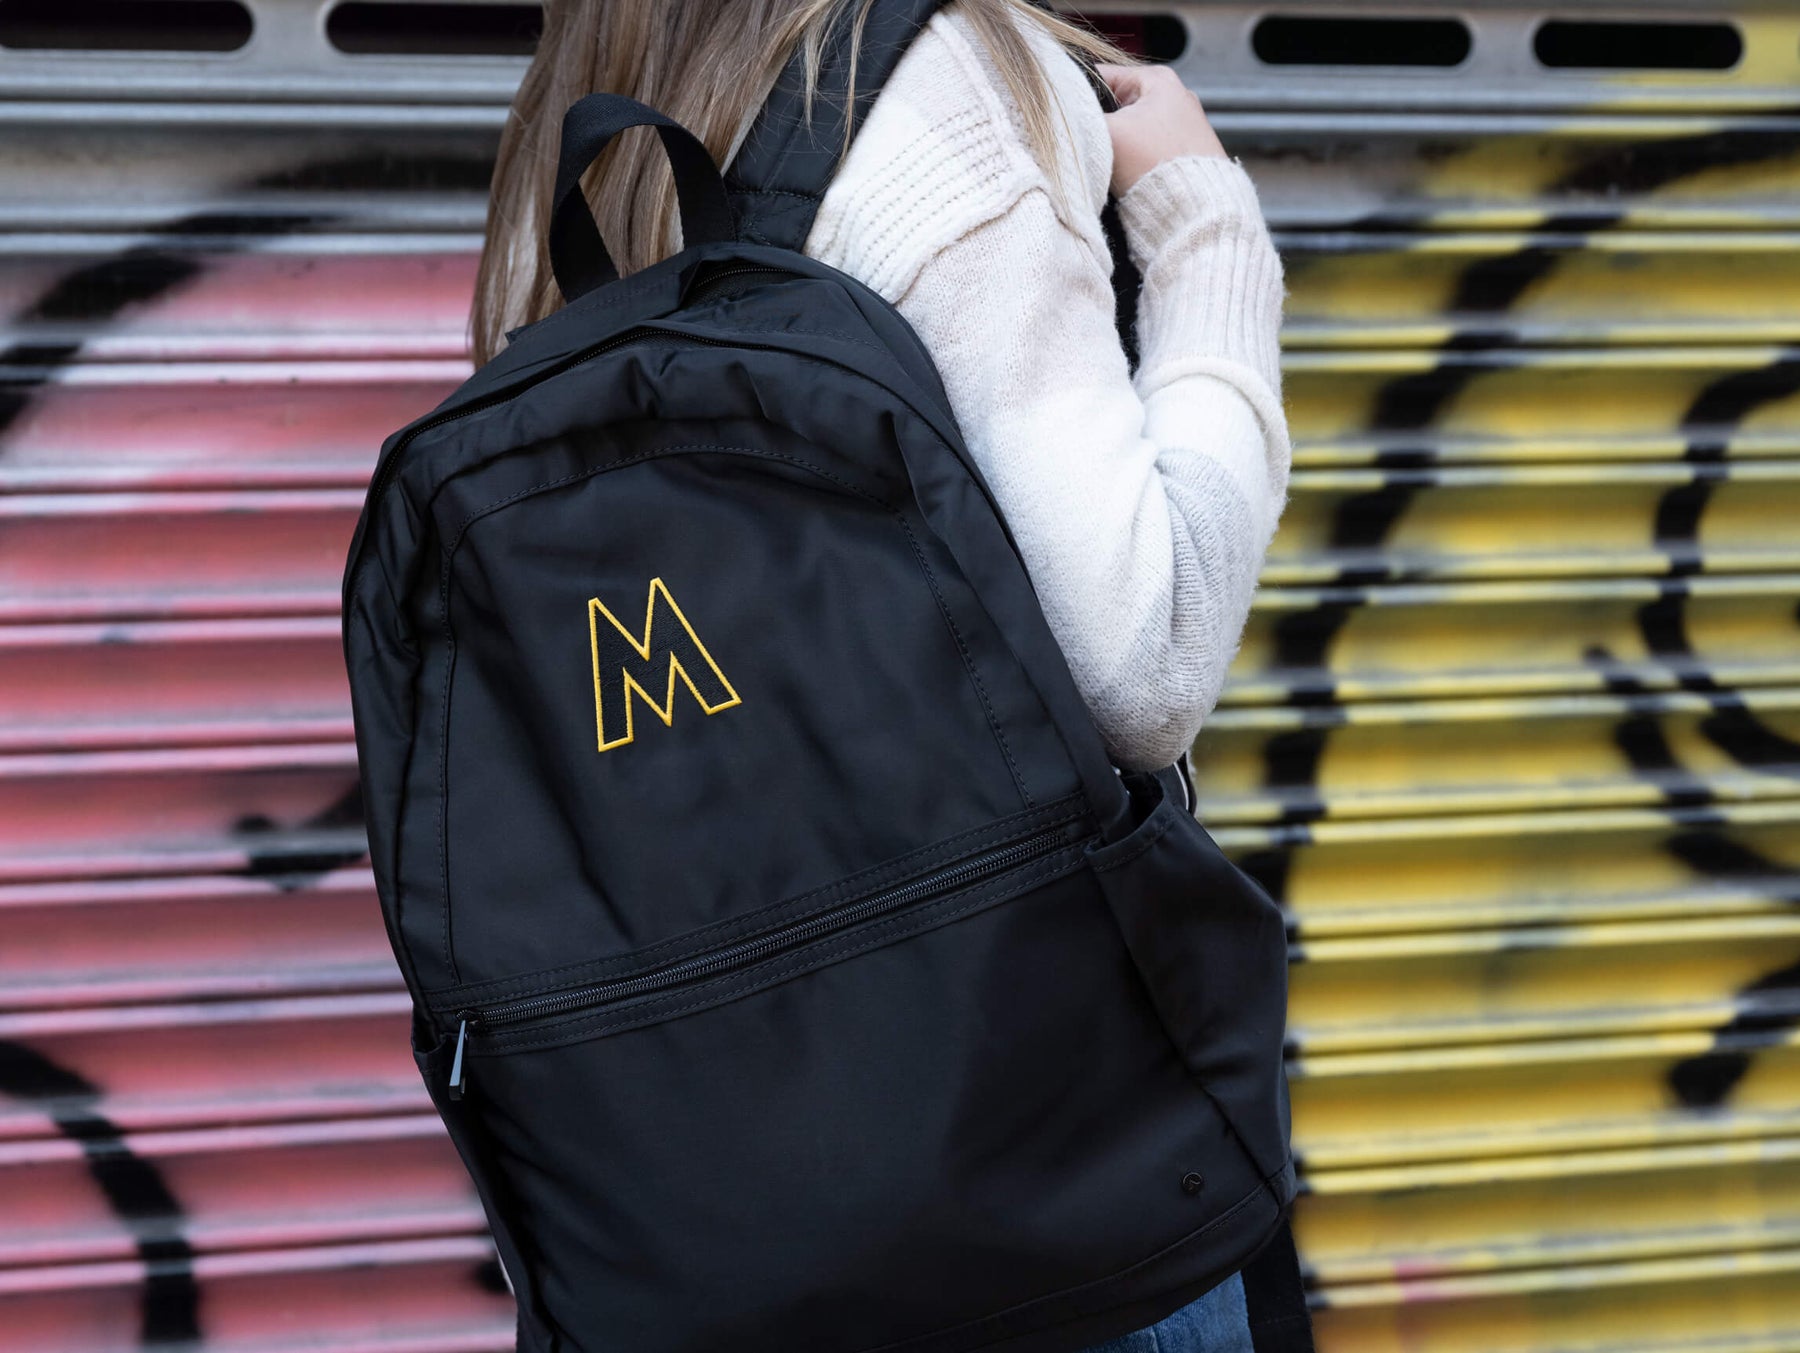 Men's Backpacks Online: Low Price Offer on Backpacks for Men - AJIO